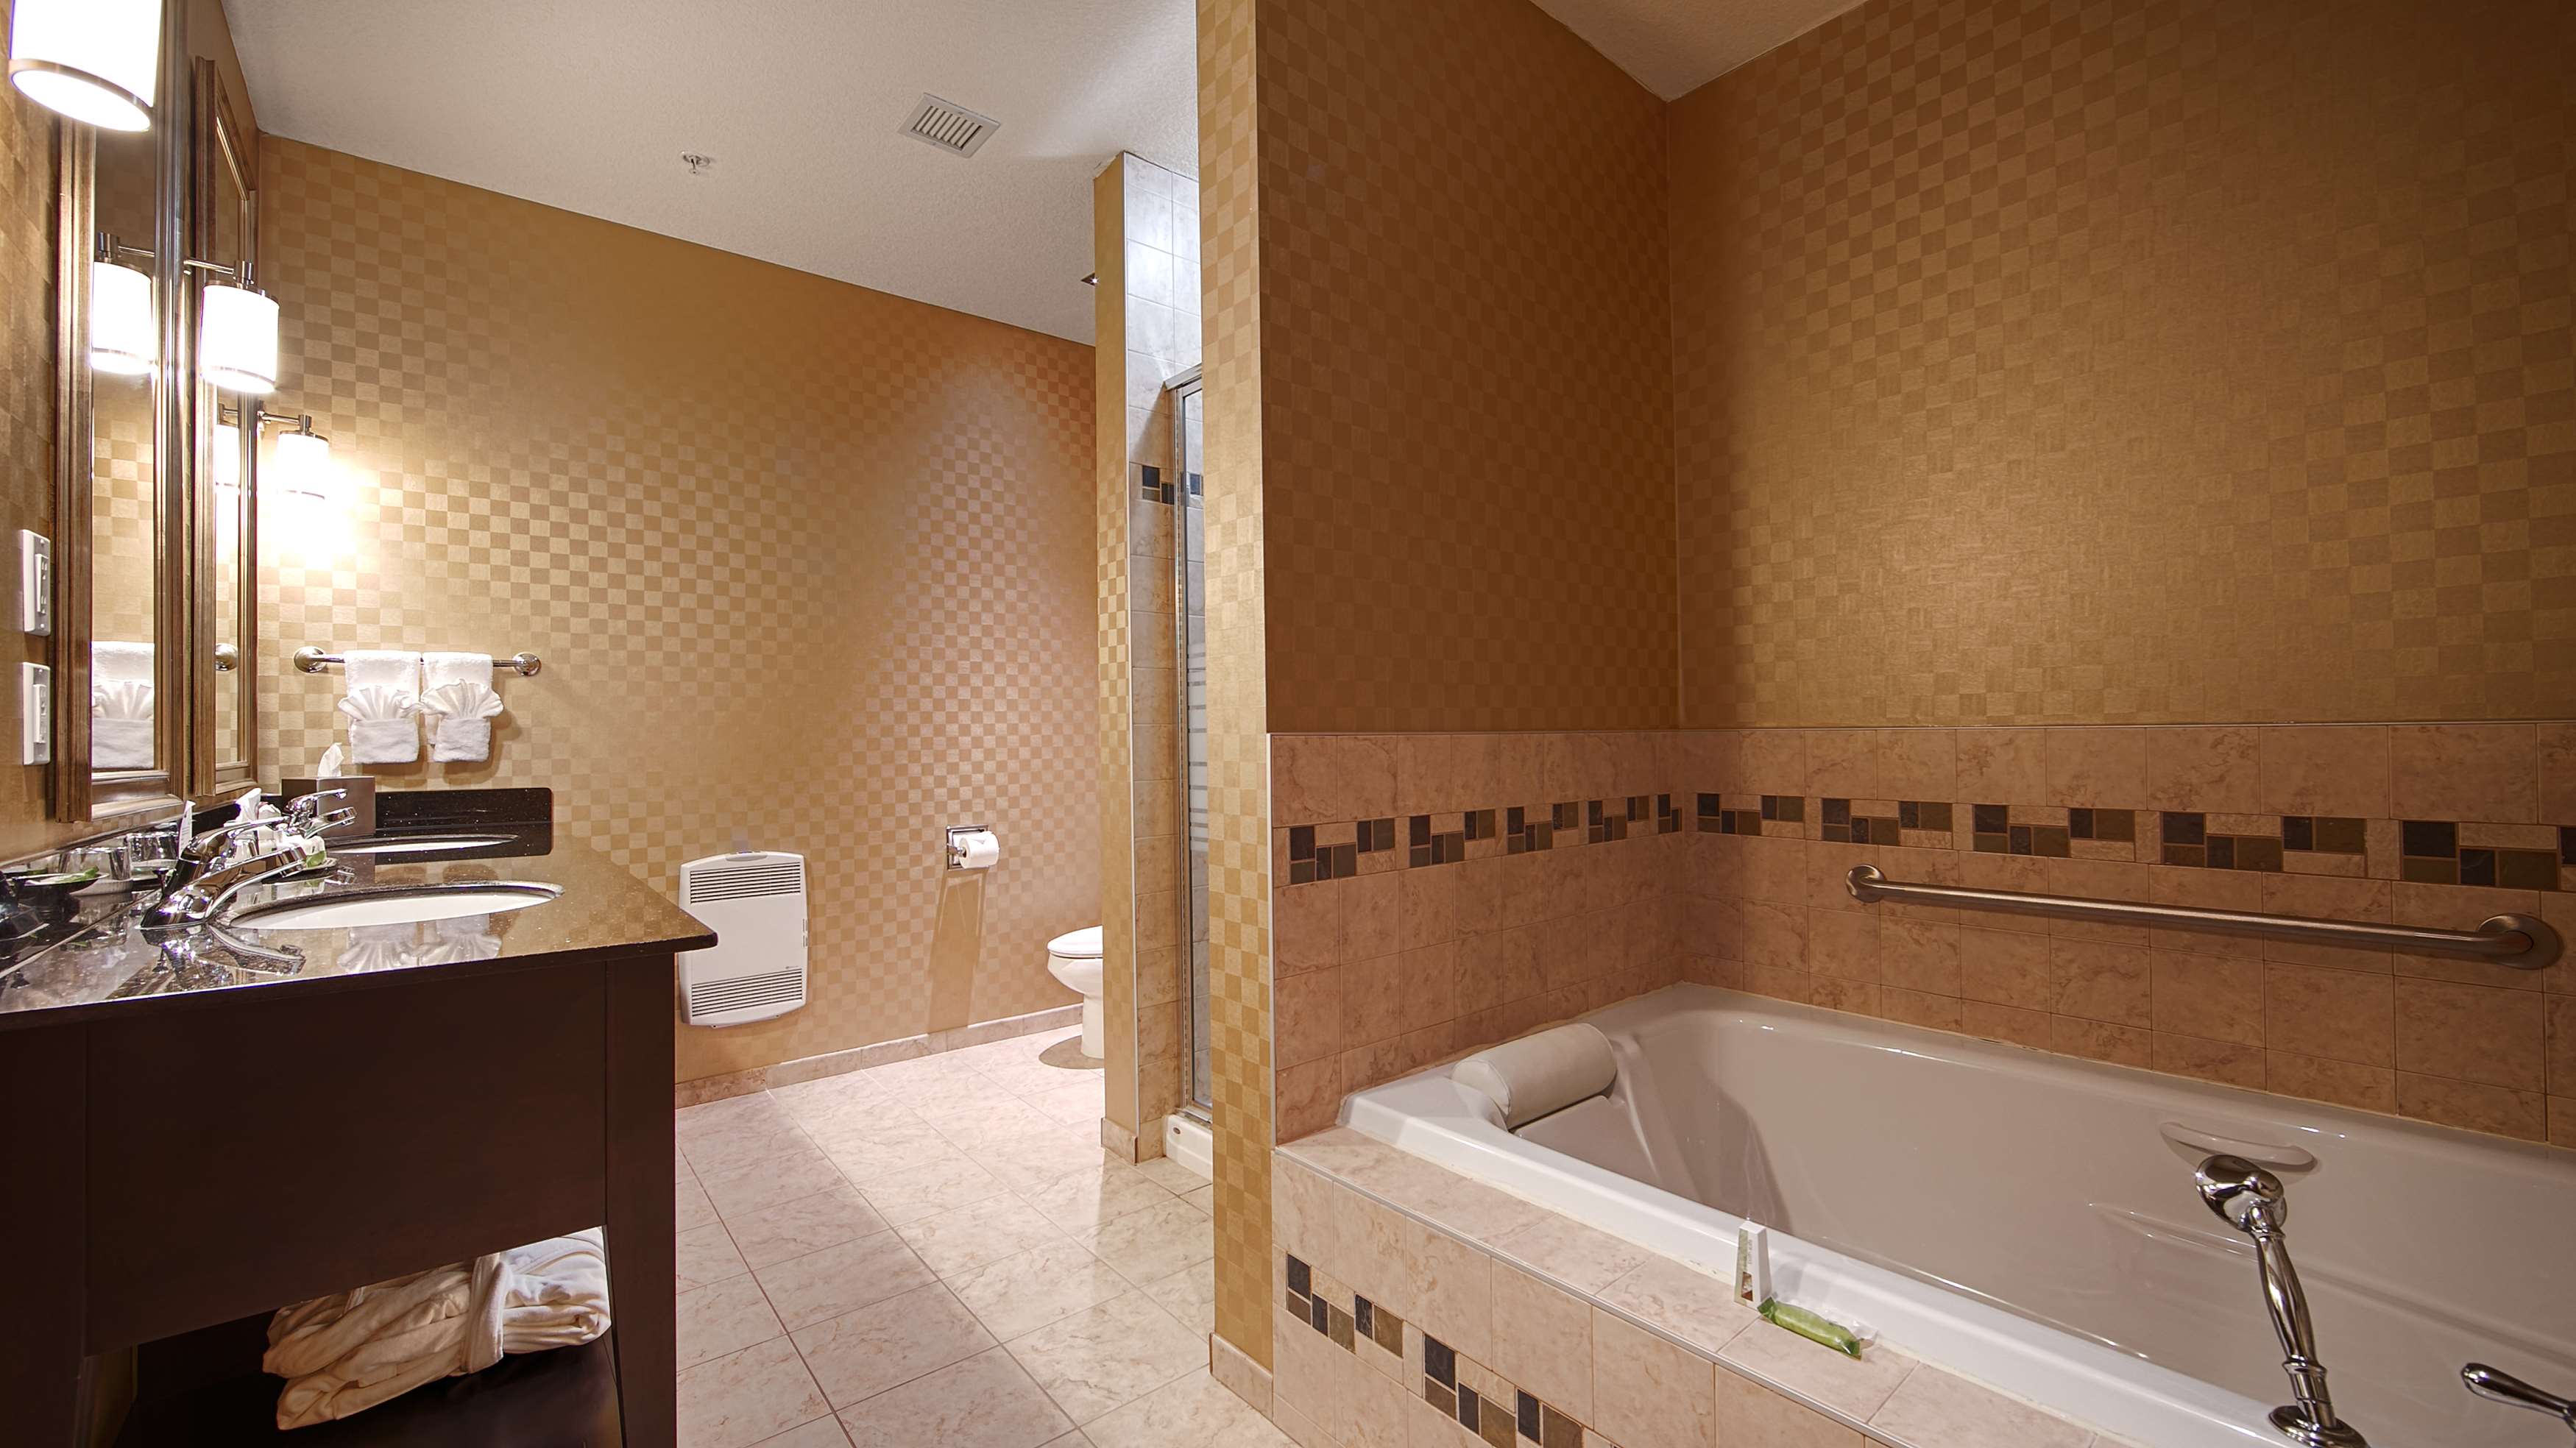 Guest Bathroom Best Western Sunrise Inn & Suites Stony Plain (780)968-1716